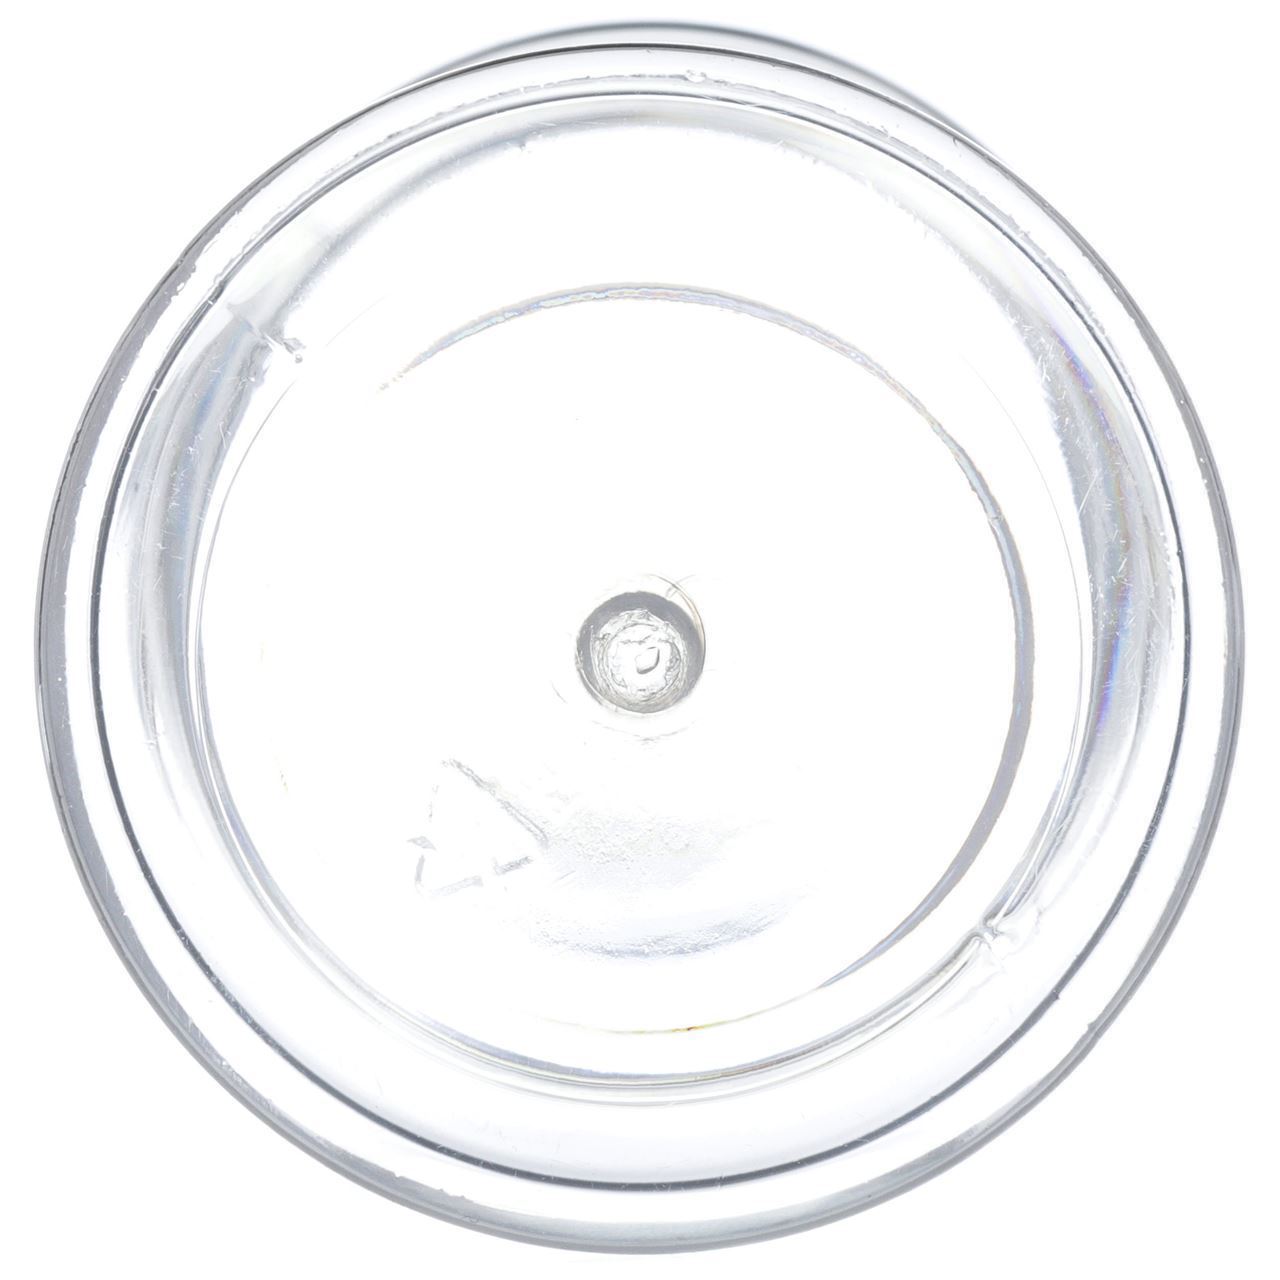 SPICE JAR 8.4 OZ PET ROUND 53-485 CLEAR – Amen Packaging